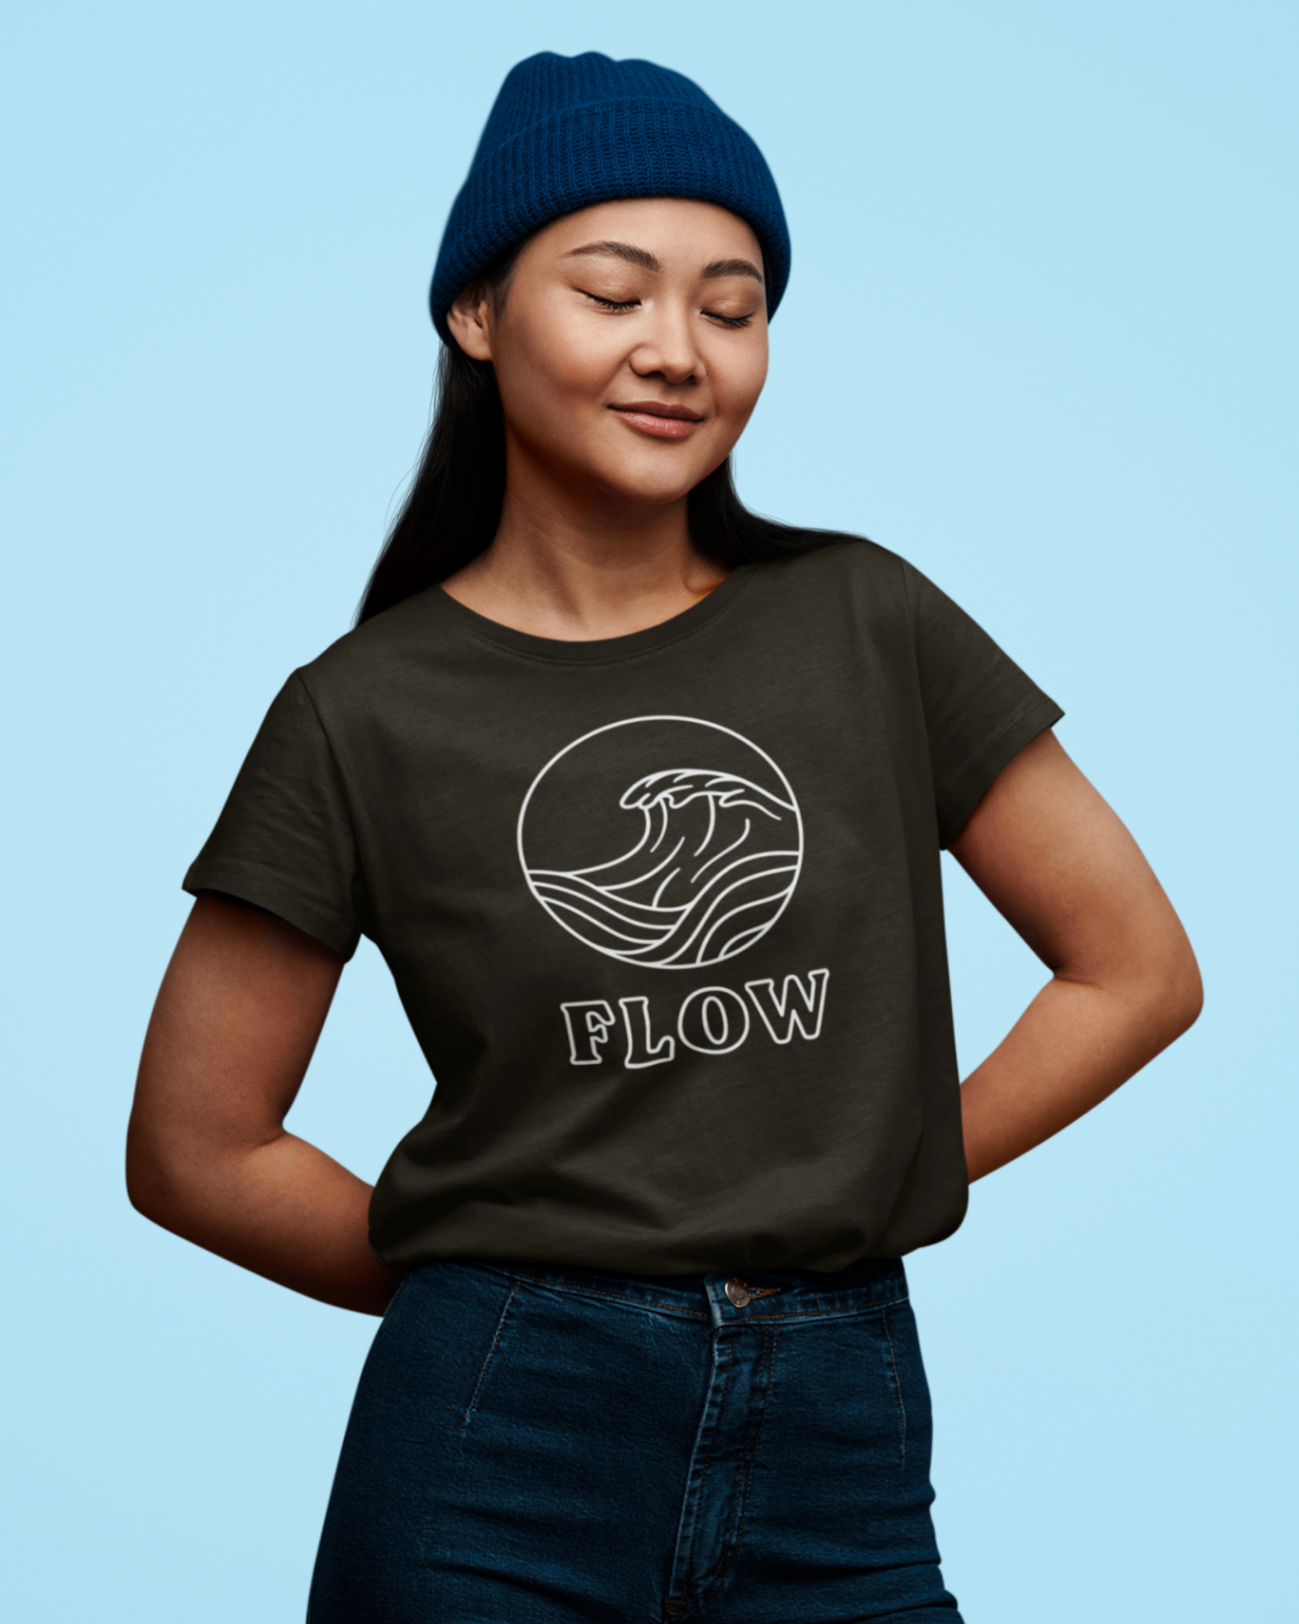 Black t-shirt 'Flow' design female model studio mockup